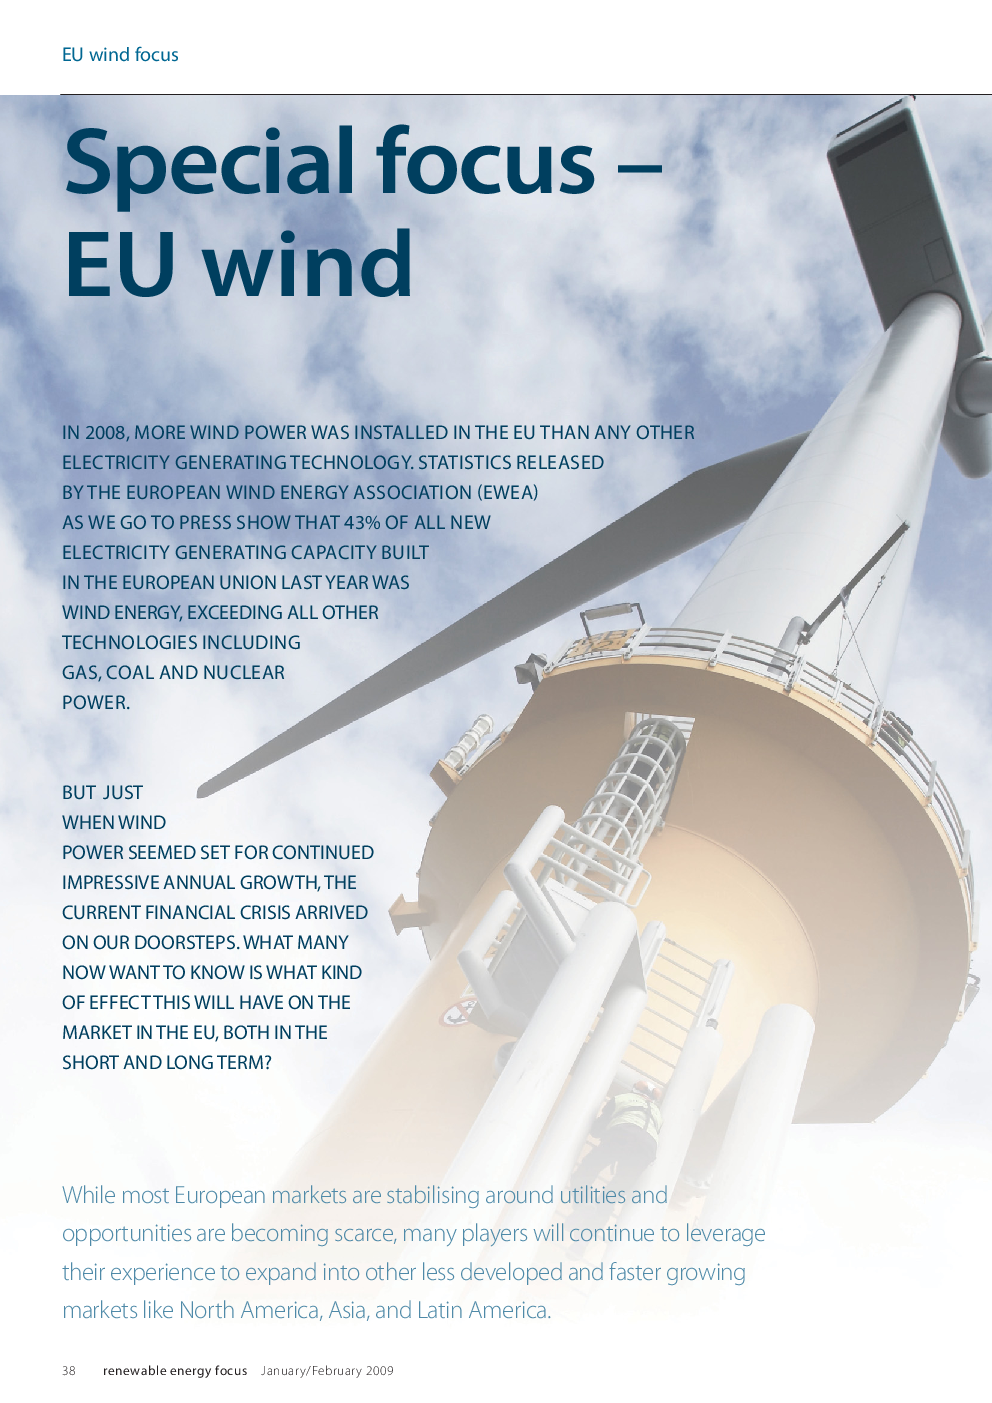 Special focus - EU wind